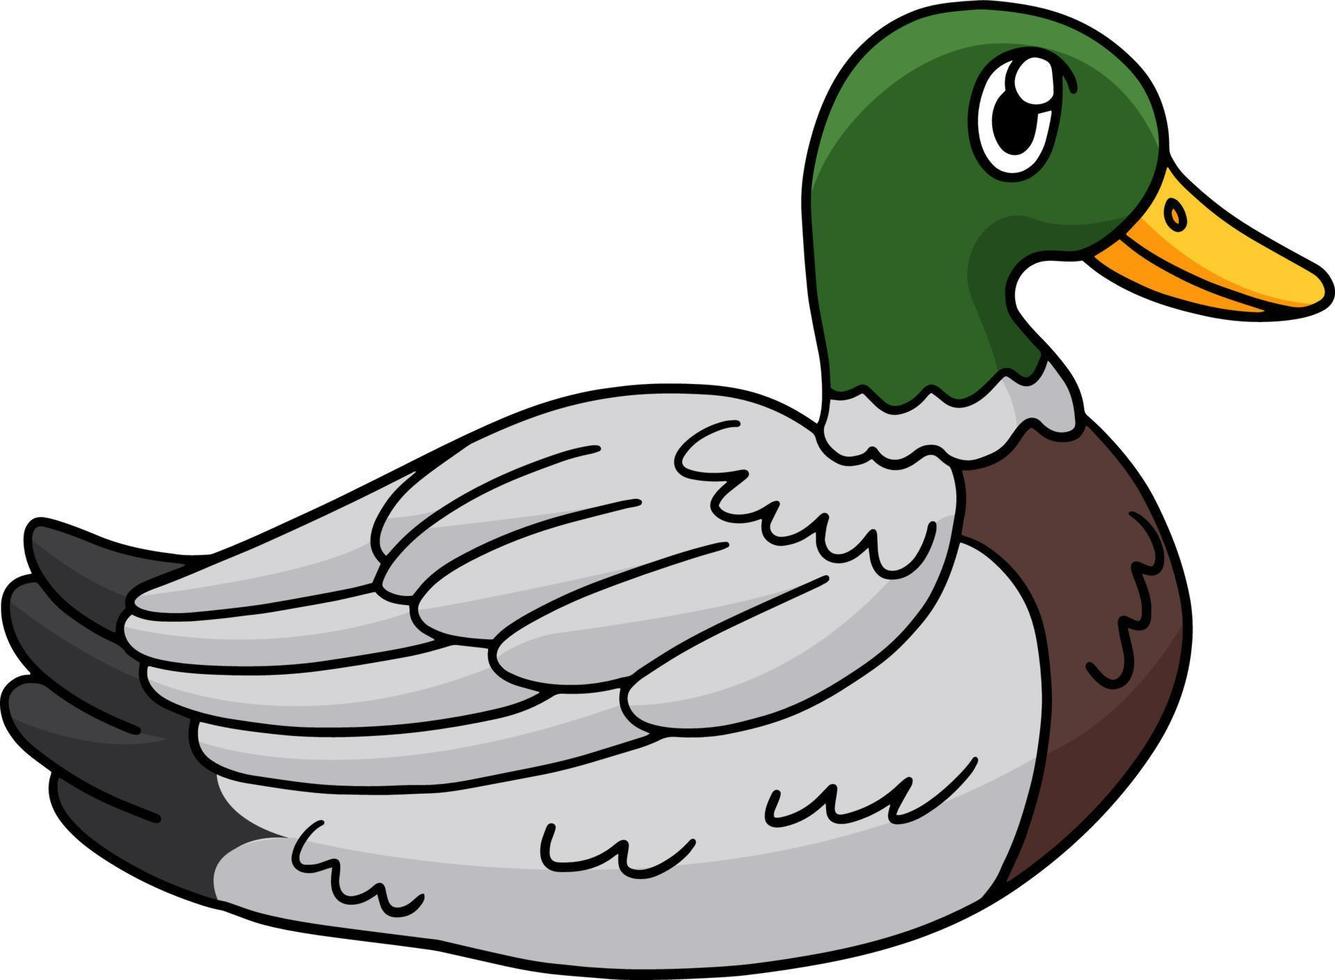 Duck Animal Cartoon Colored Clipart Illustration vector